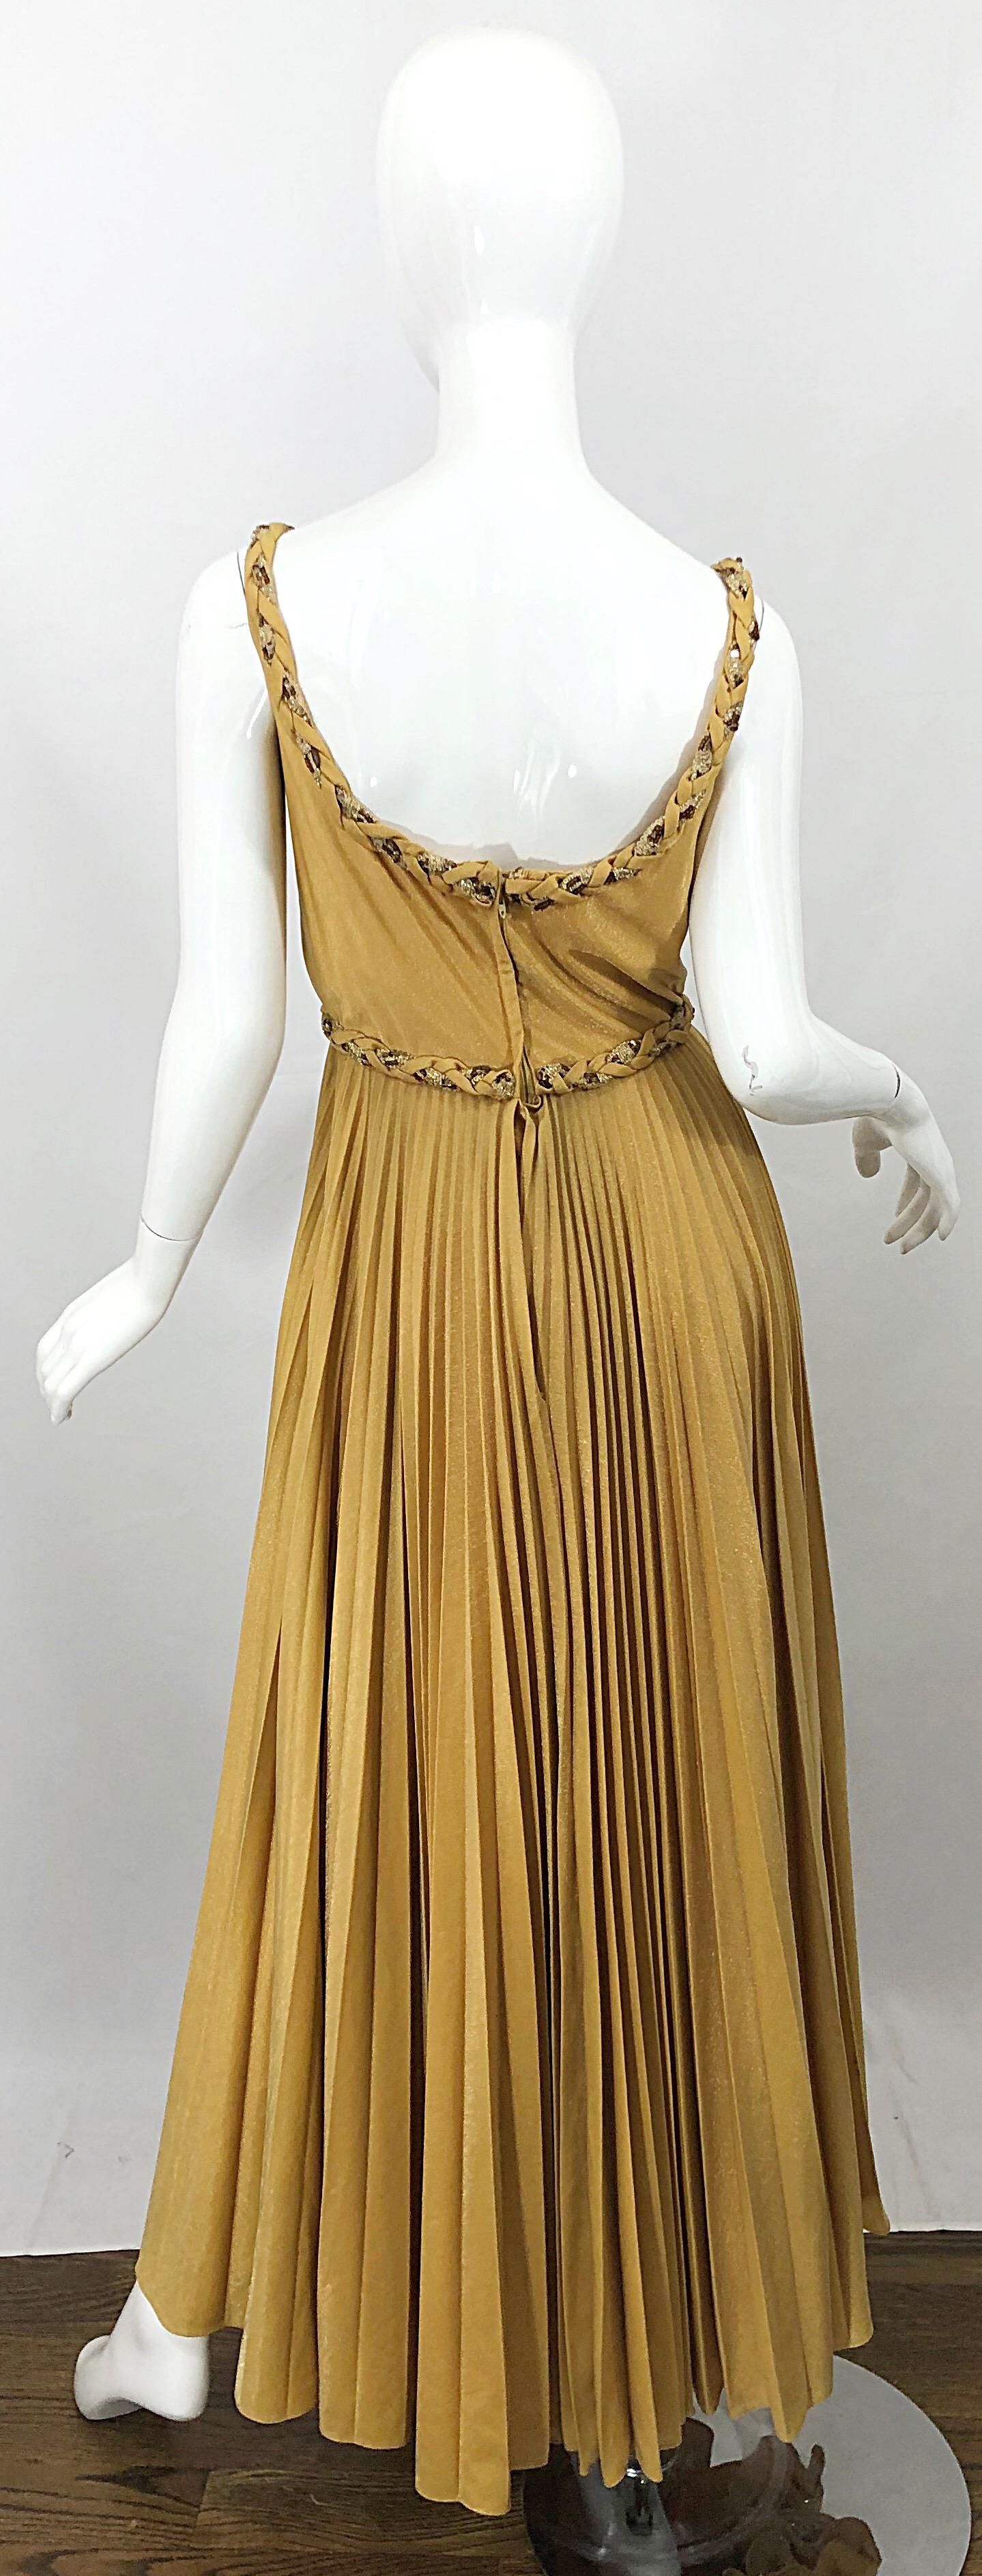 1970s gold dress